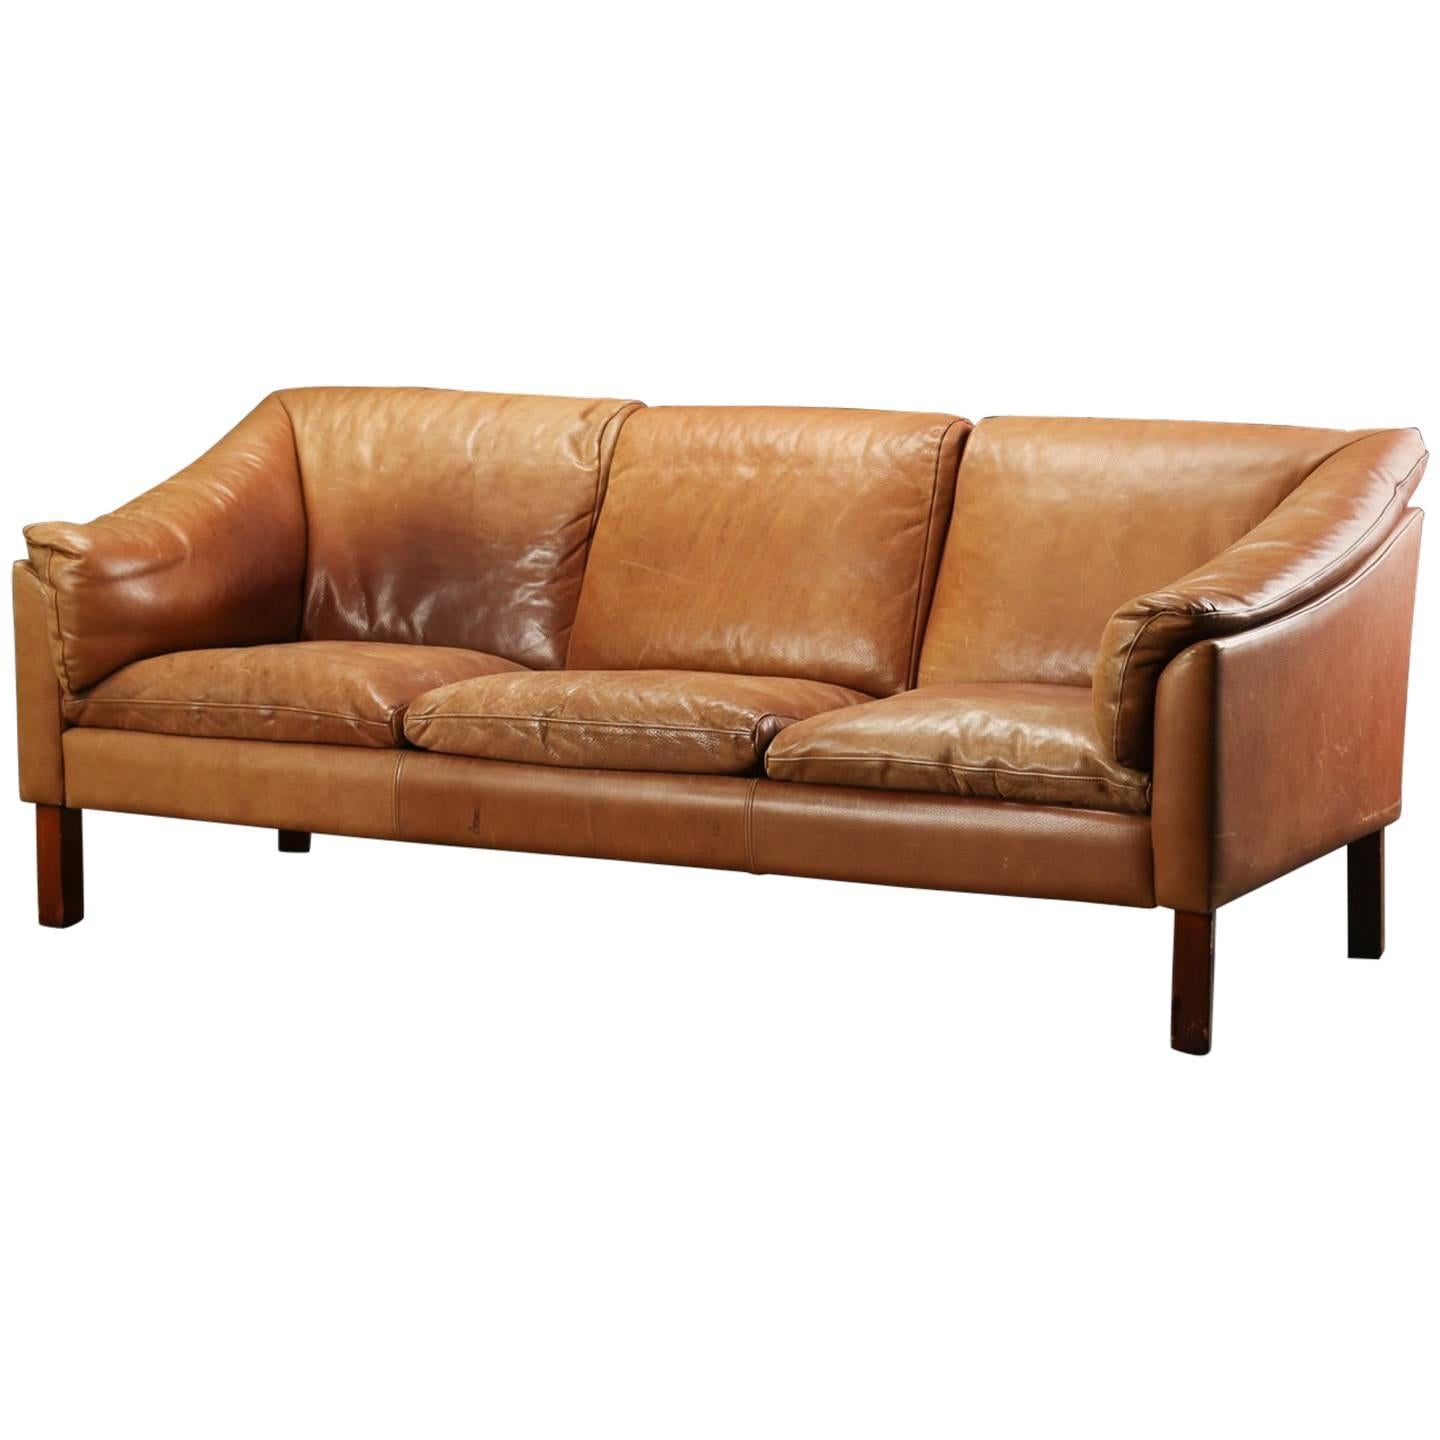 Danish Modern Leather Upholstered Sofa